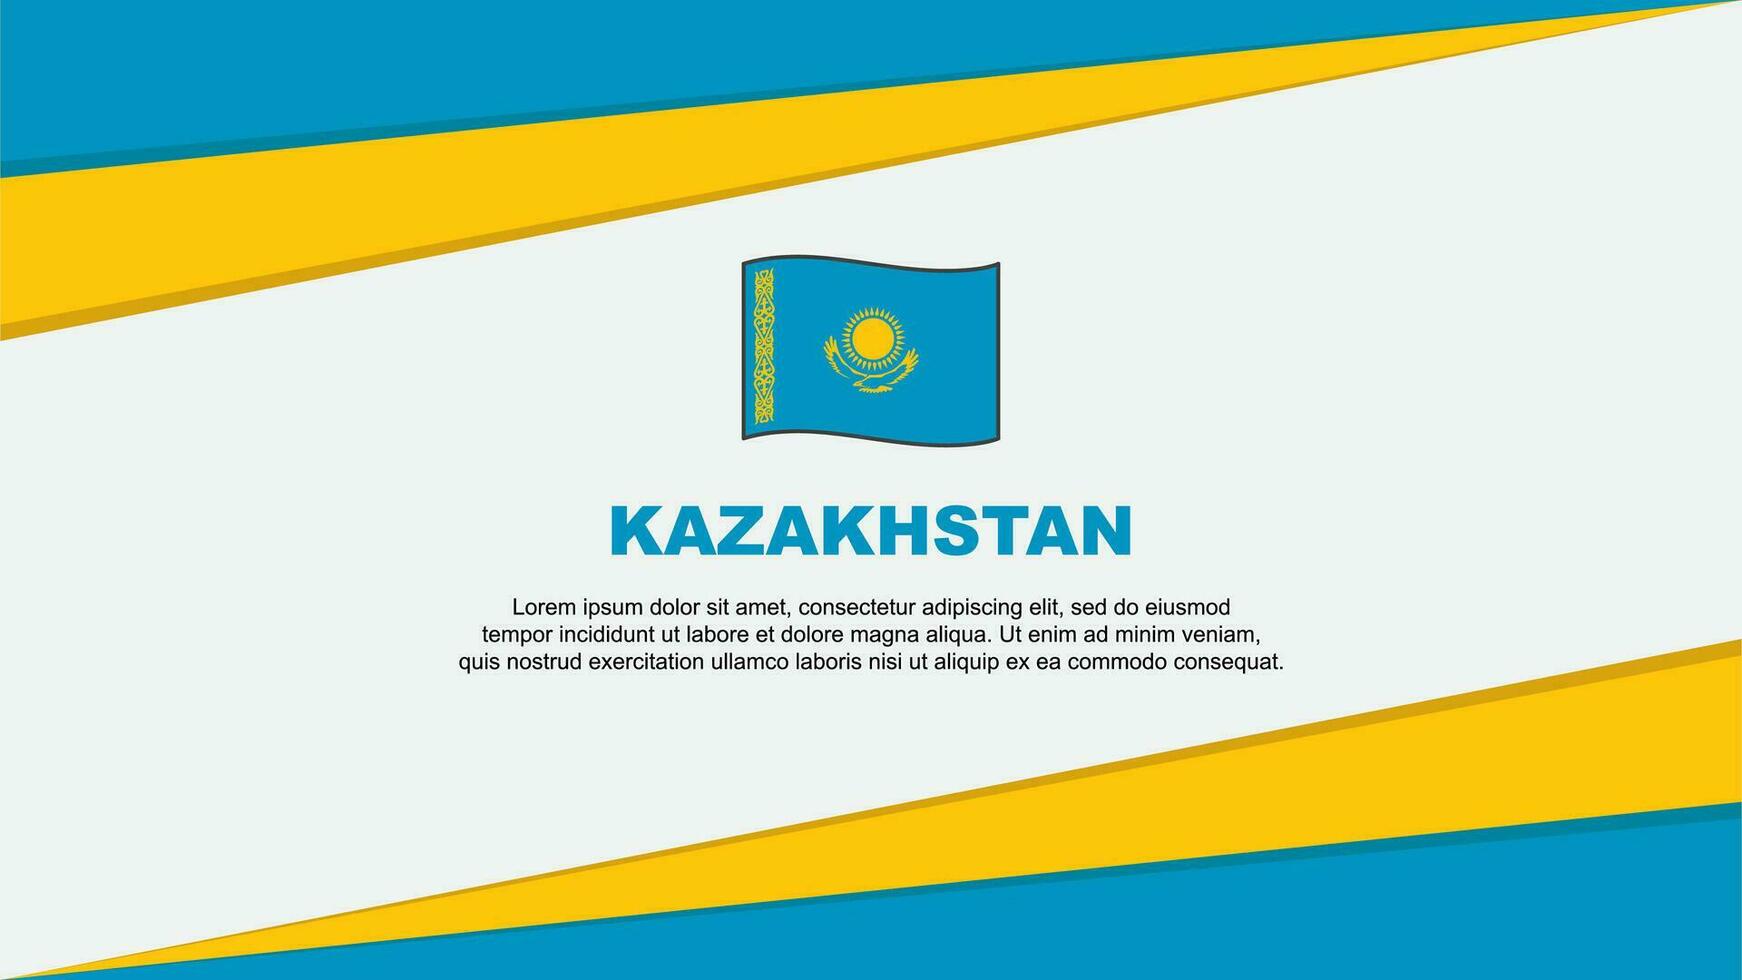 Kazakhstan Flag Abstract Background Design Template. Kazakhstan Independence Day Banner Cartoon Vector Illustration. Kazakhstan Banner